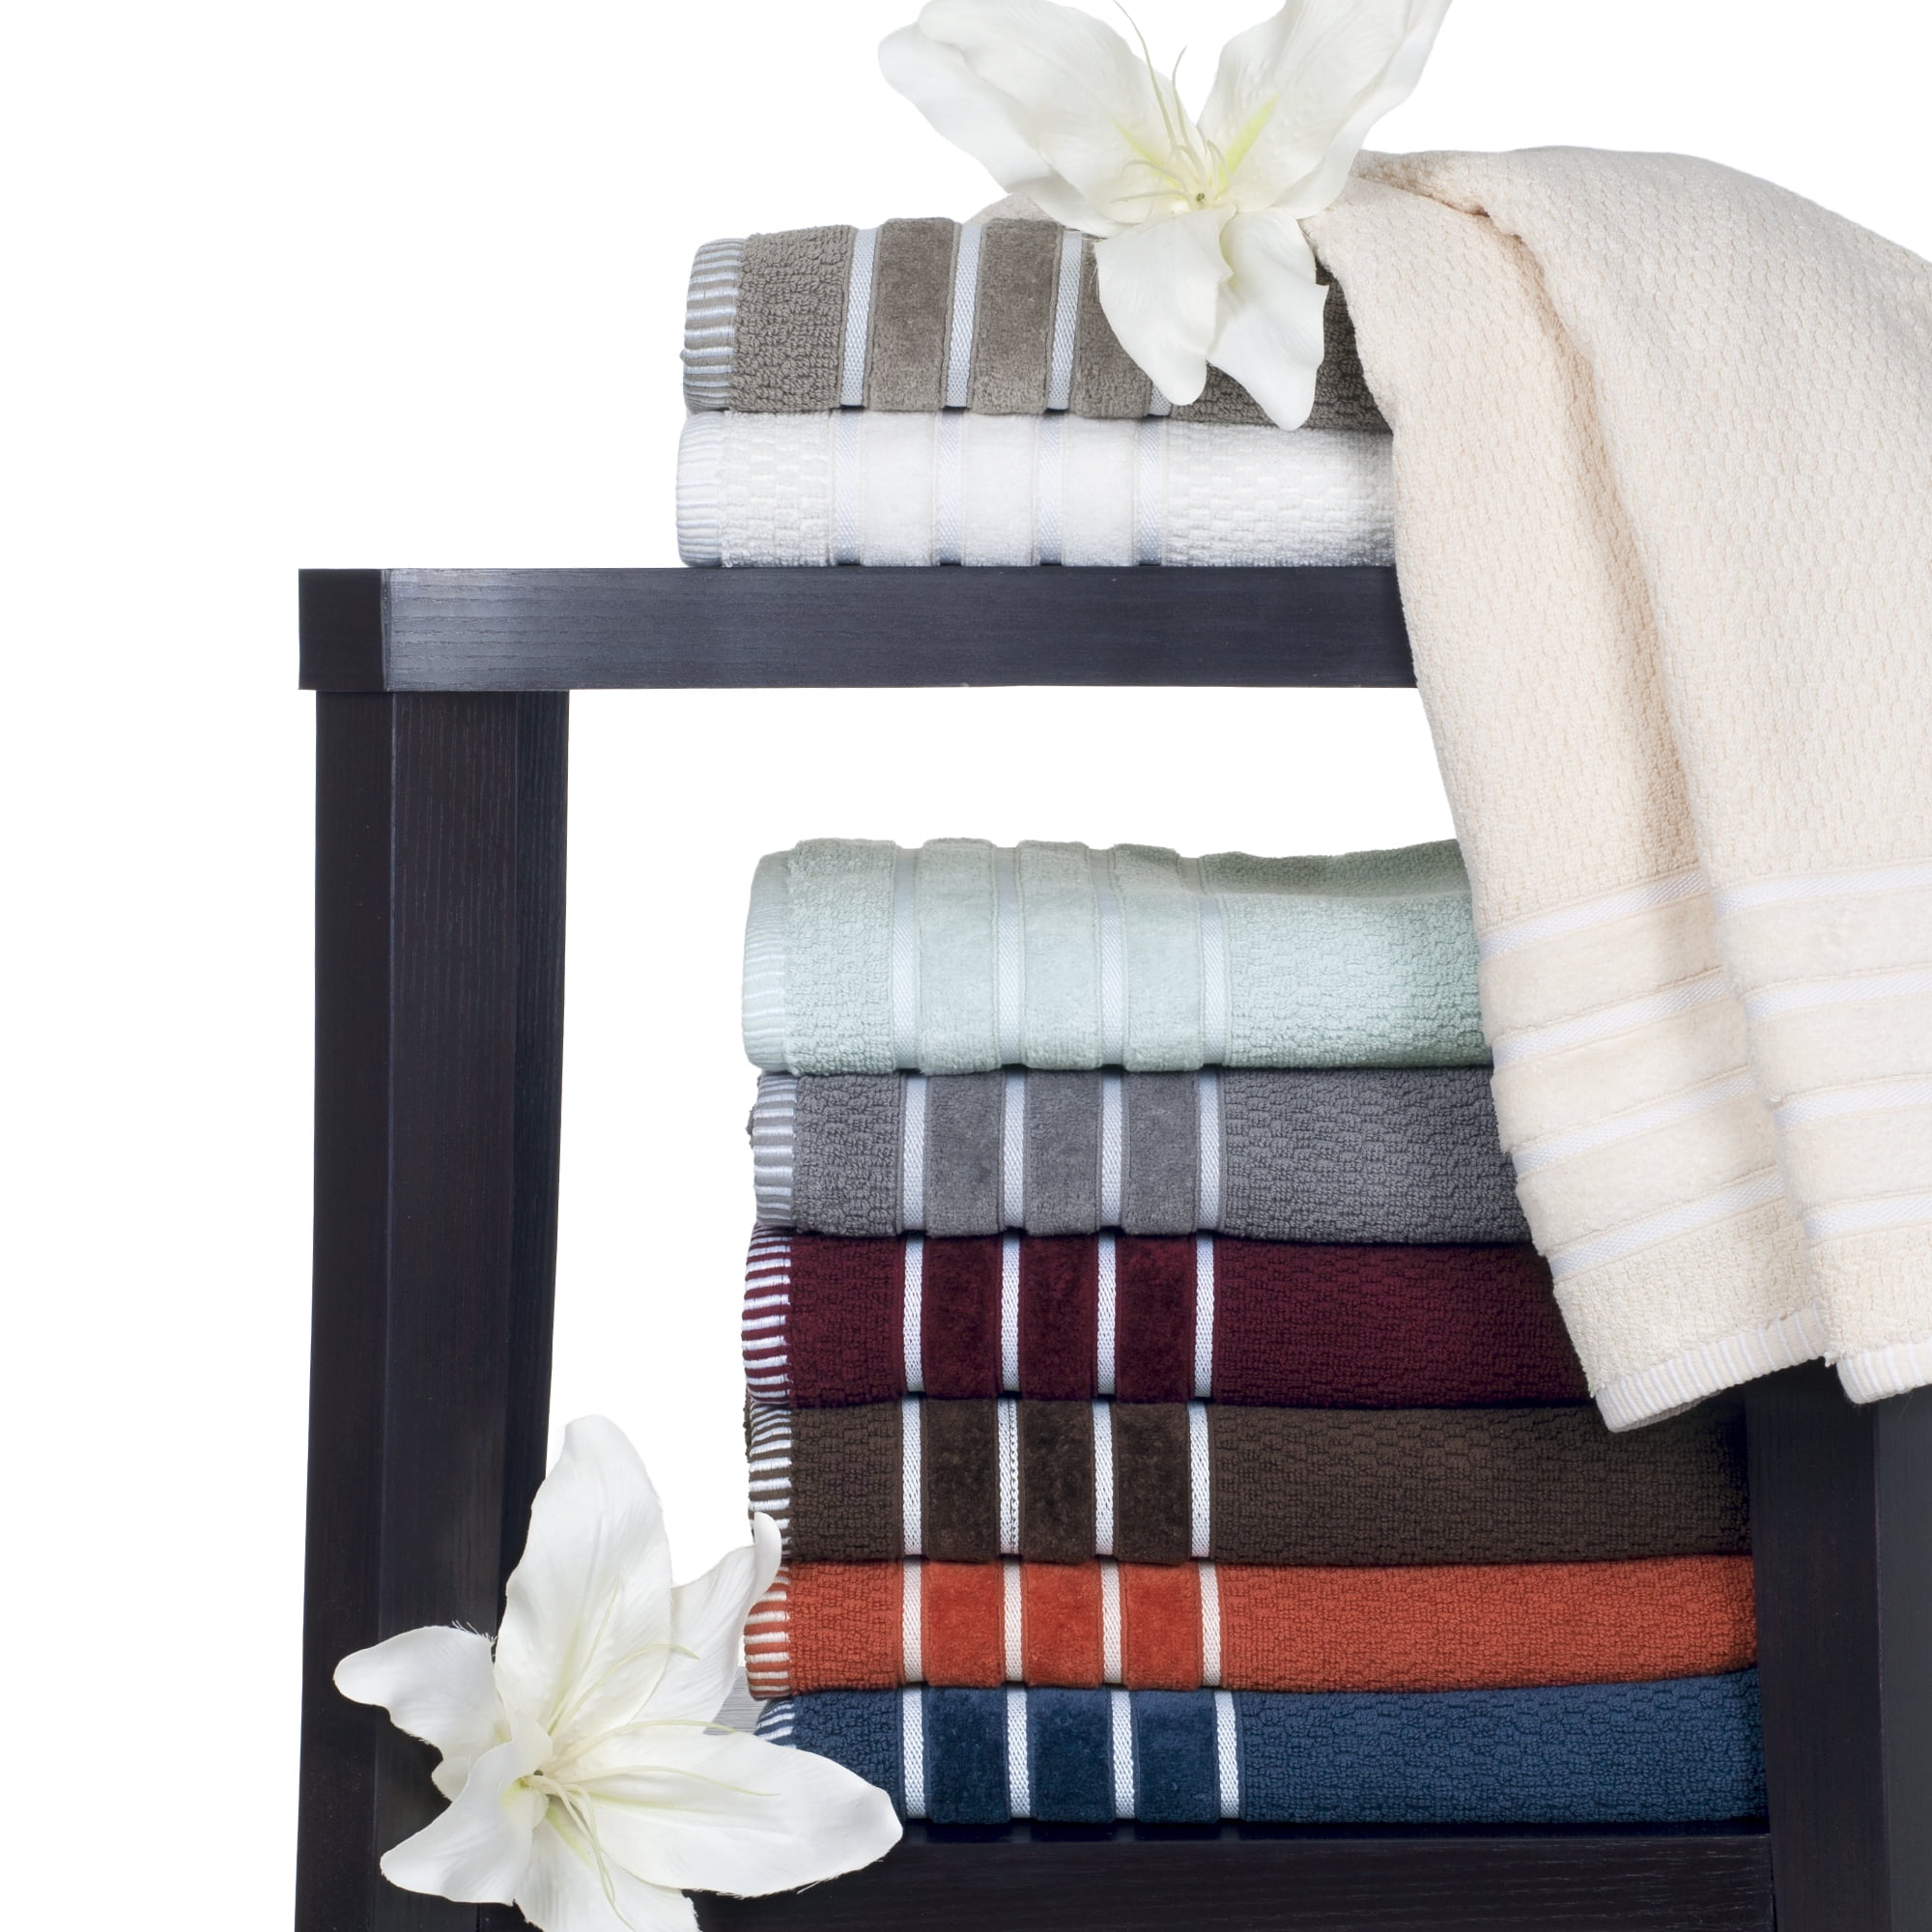 Lavish Home Rio 8 Piece Cotton Towel Set - Burgundy